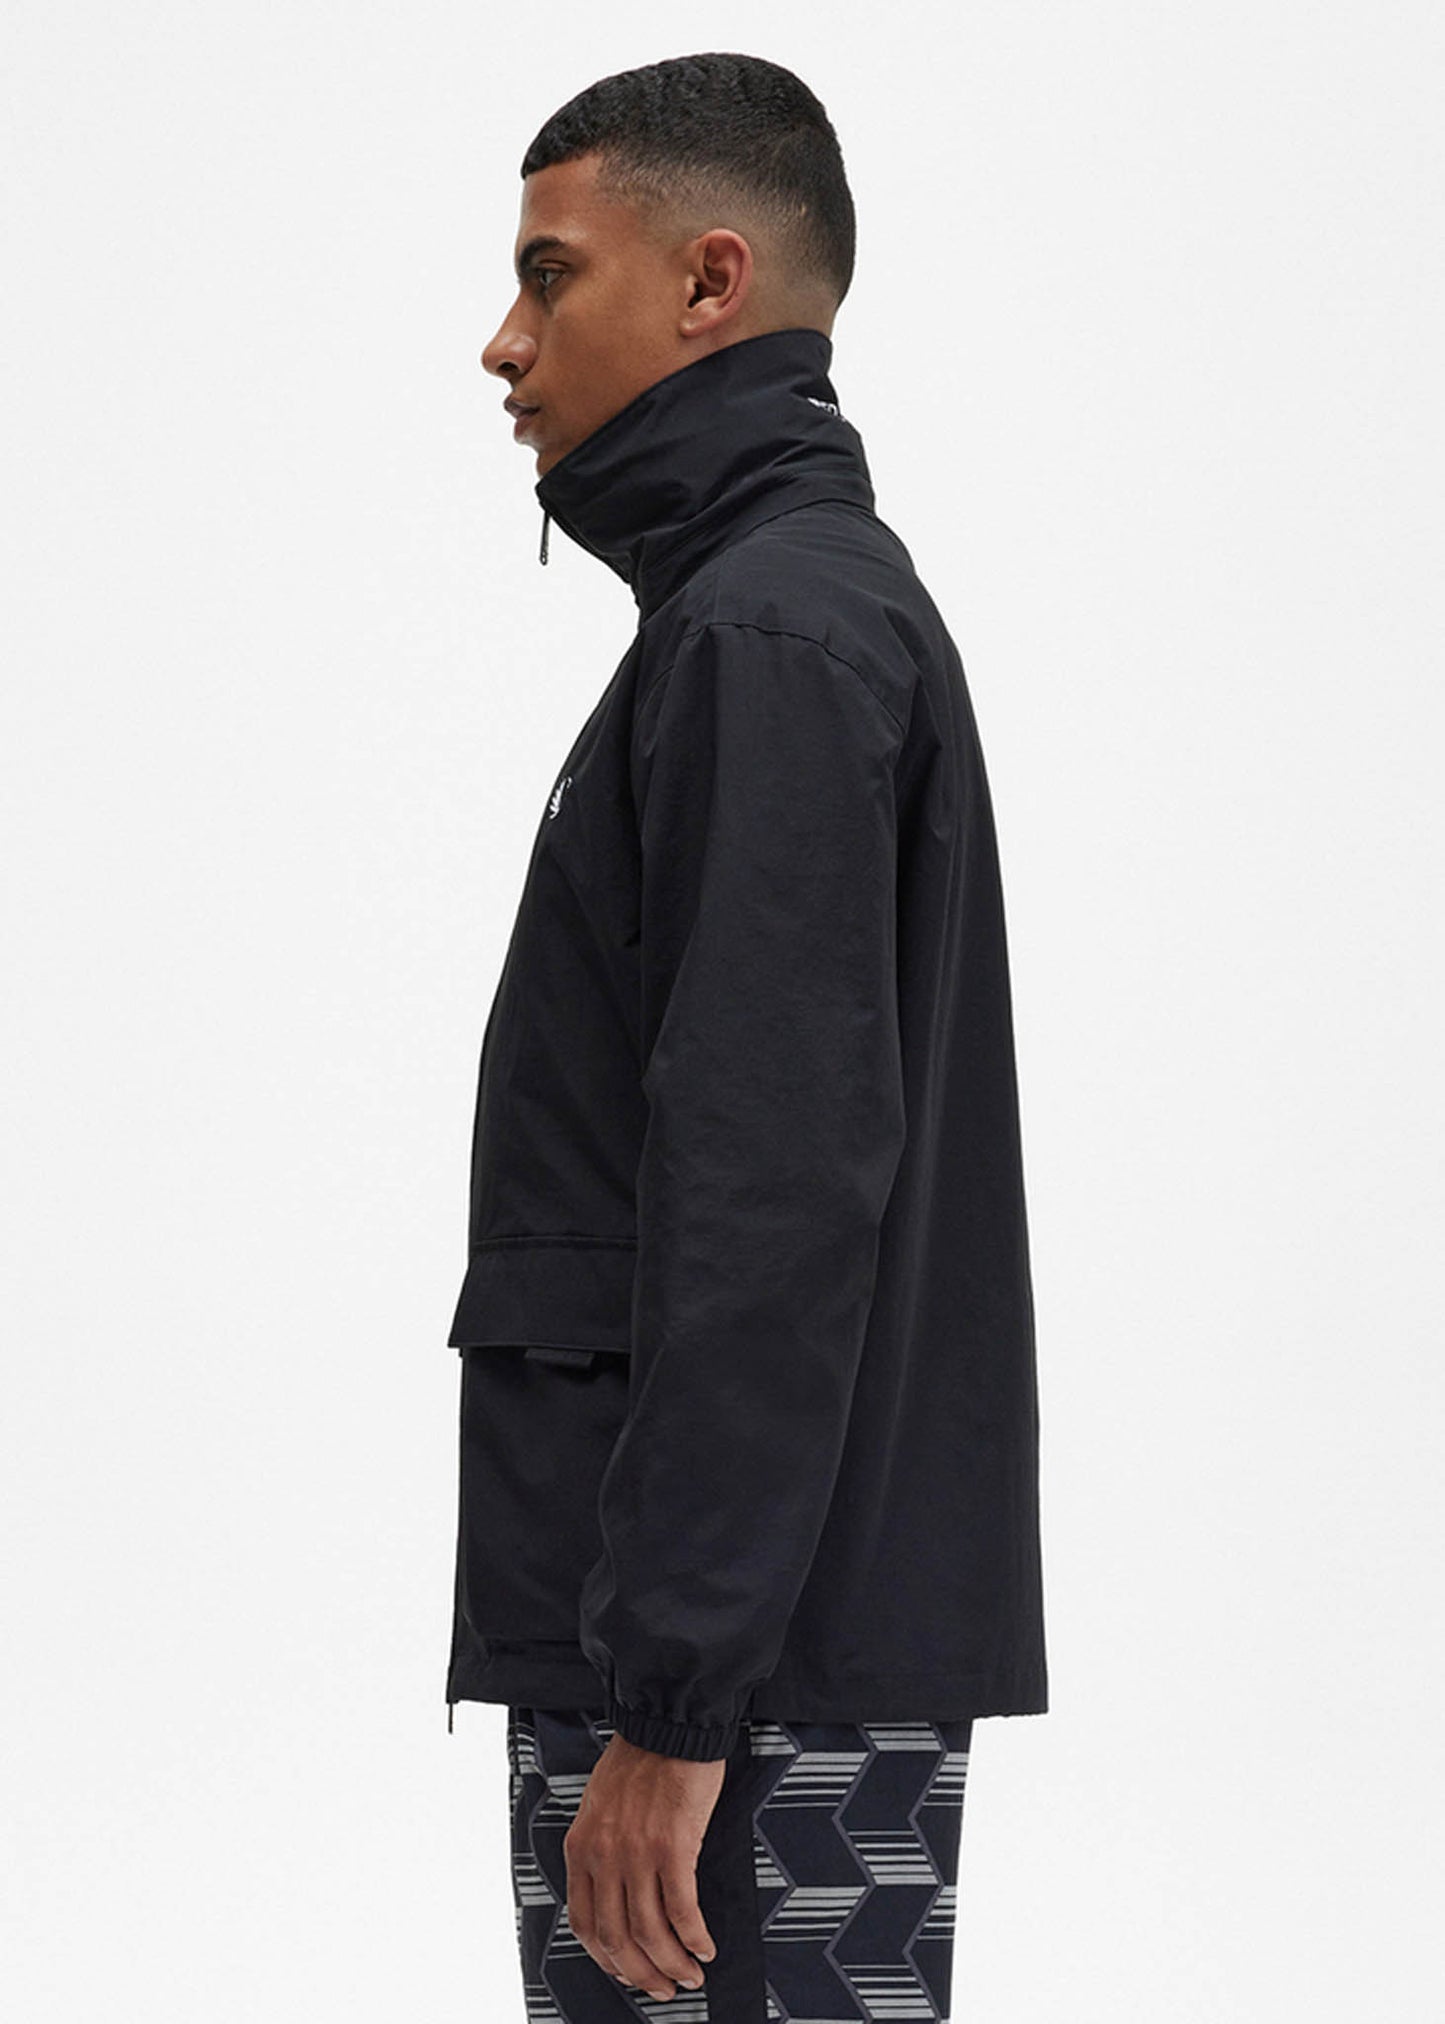 Patch pocket zip through jacket - black